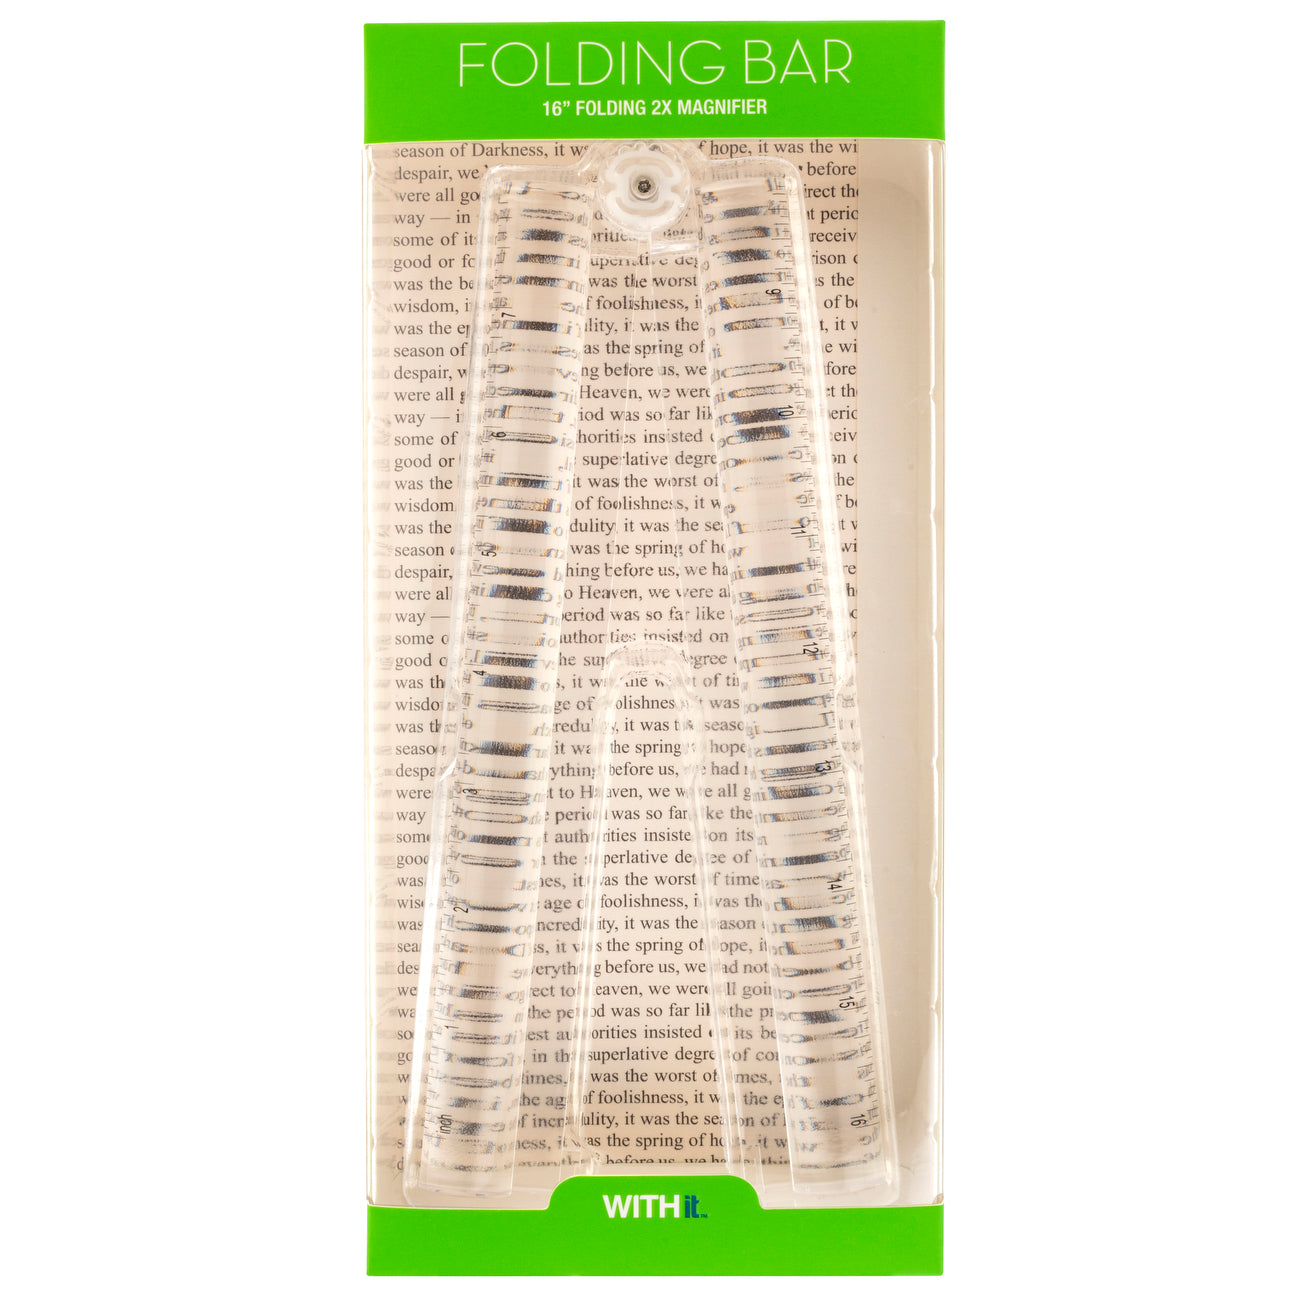 Folding Bar Reading Magnifier